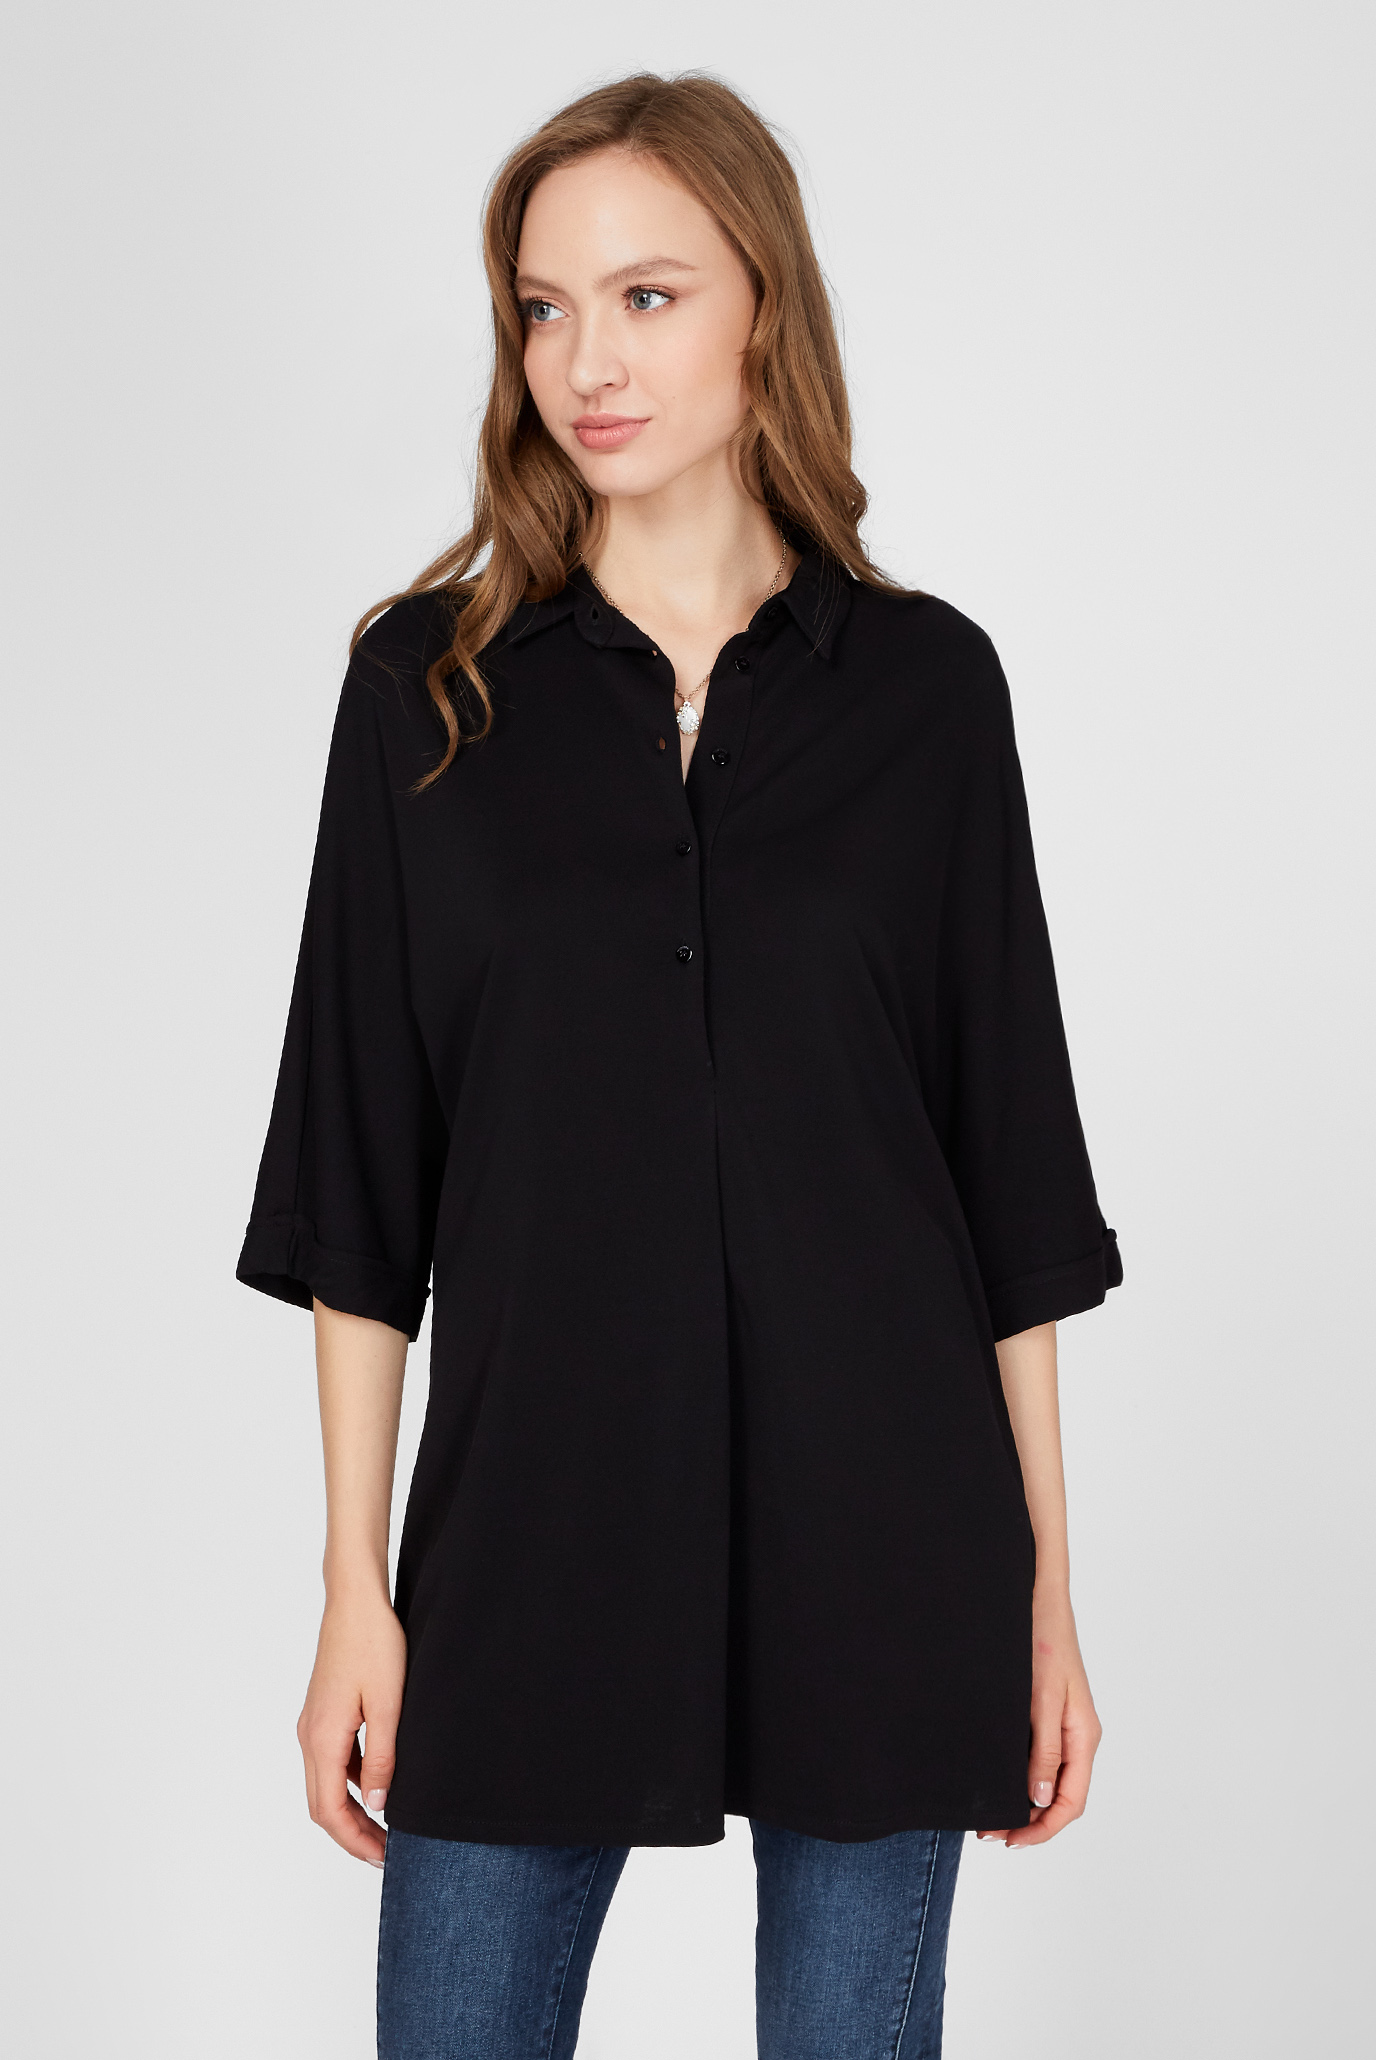 Жіноча чорна блуза 1